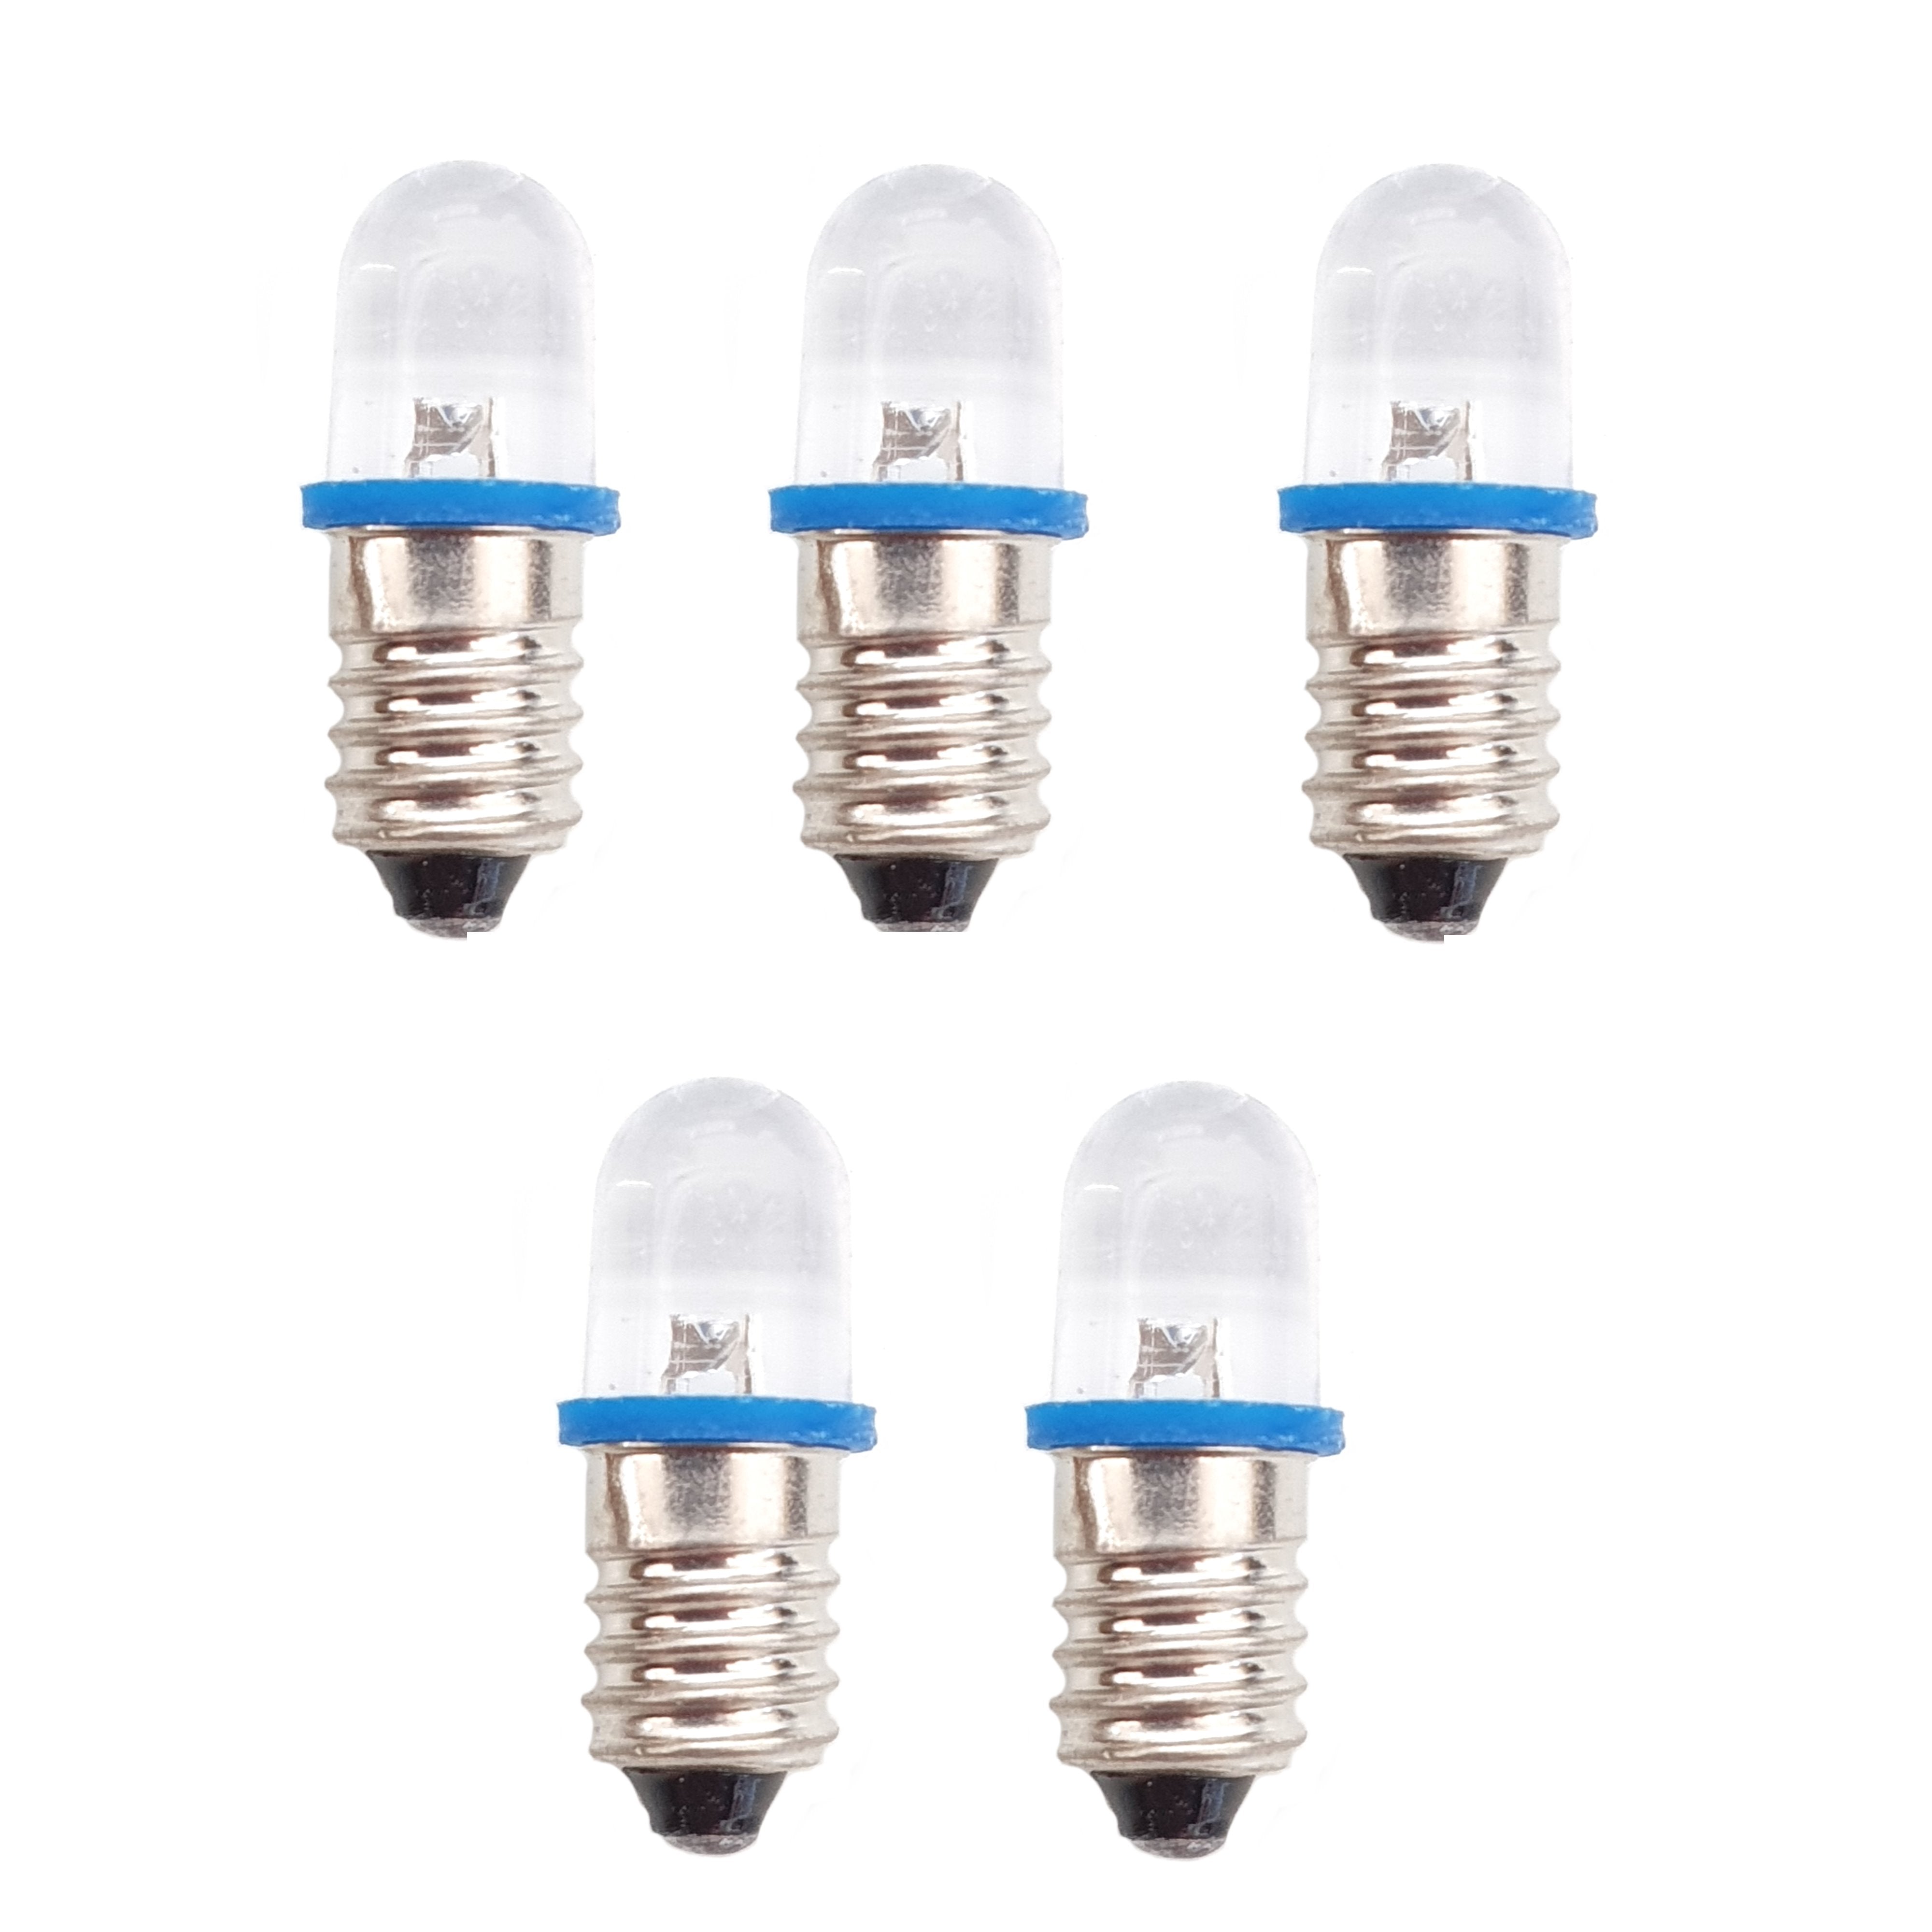 5 x 12V MES E10 LED Lamp Bulb 10mm Diameter - Blue